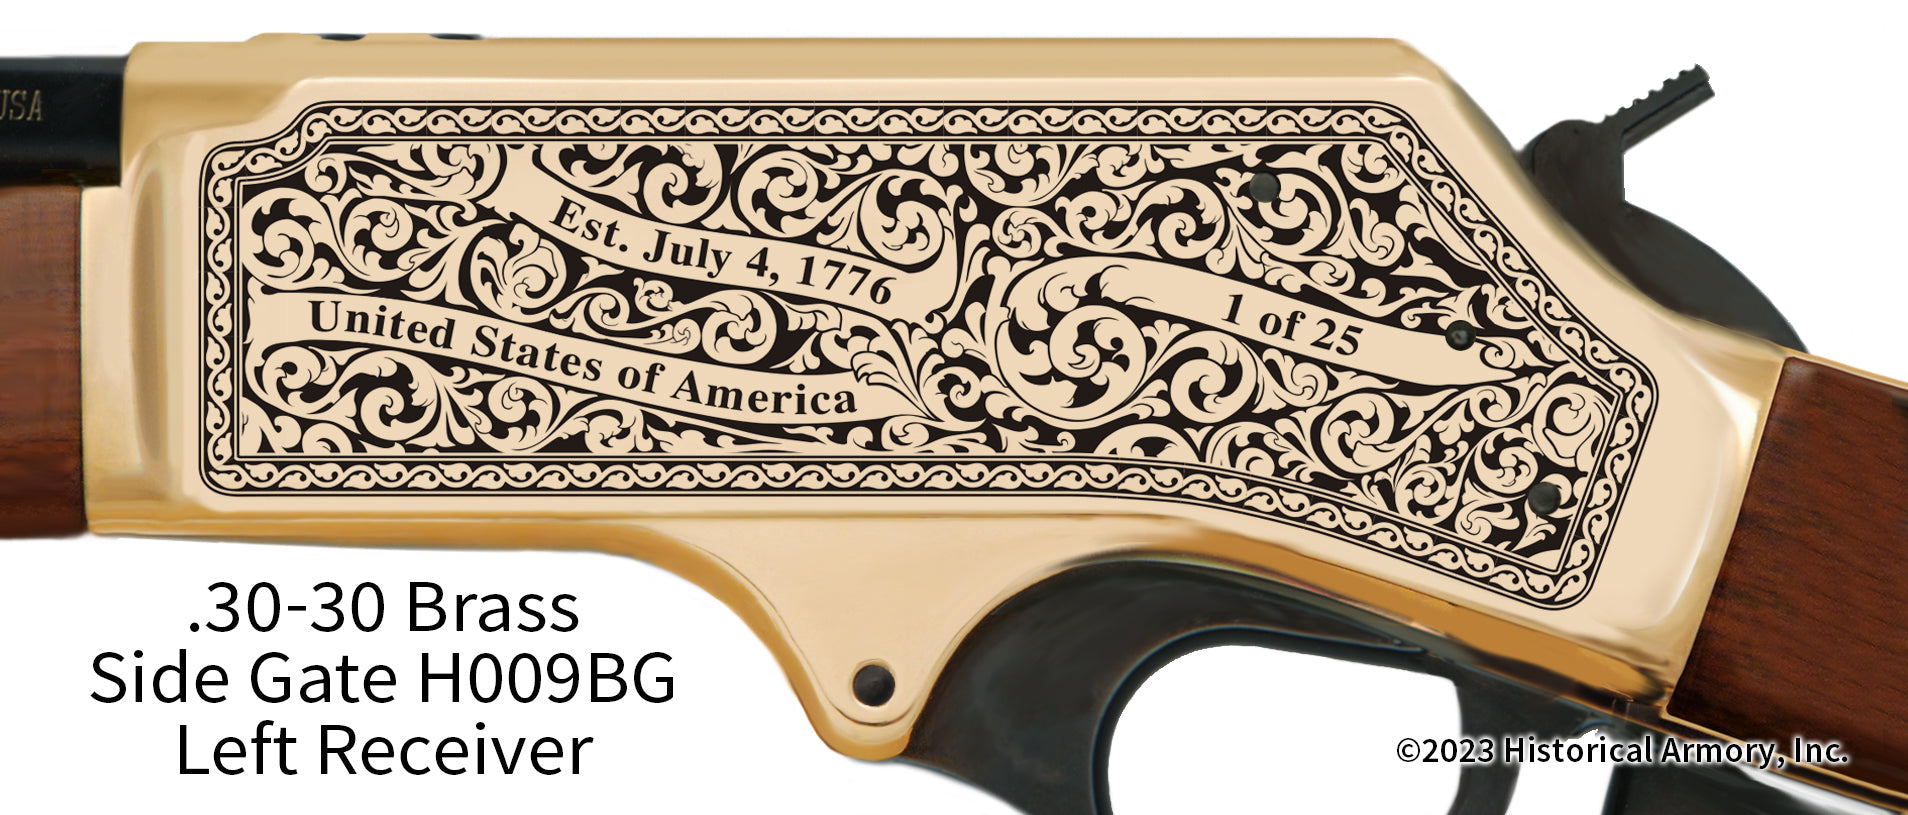 Union County North Carolina Engraved Henry .30-30 Brass Side Gate Rifle